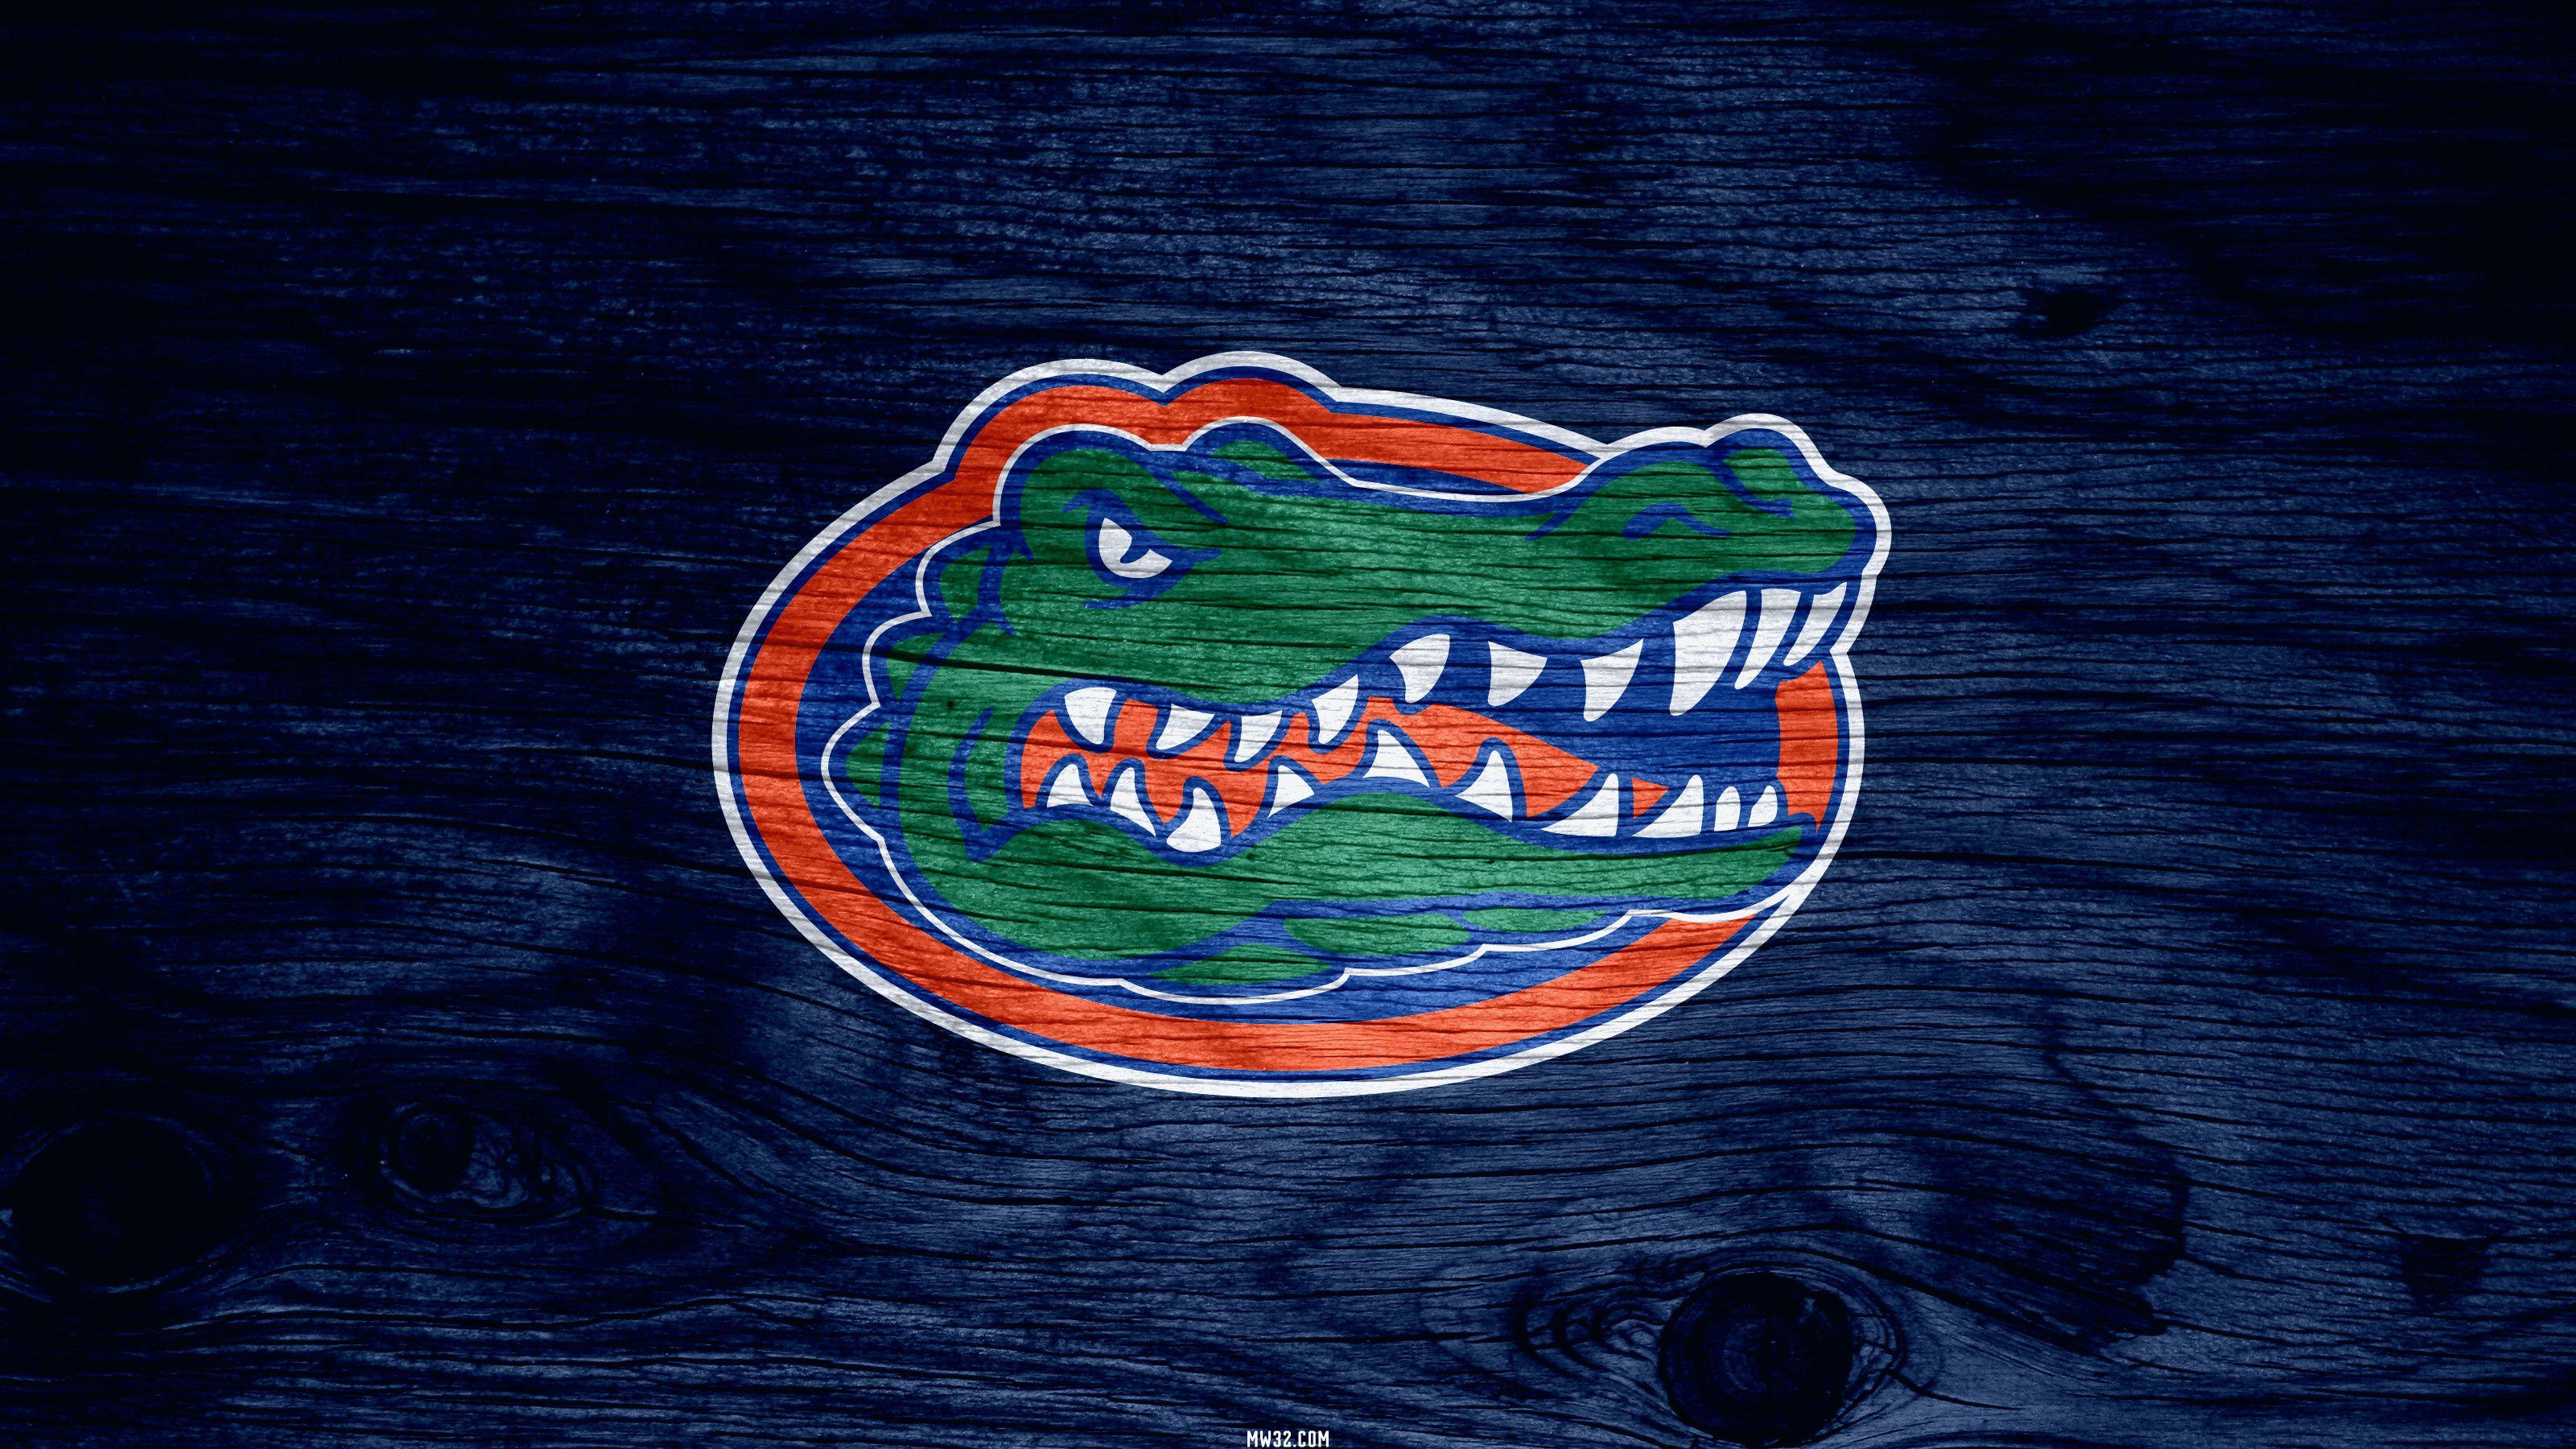 Free Download Amazing Florida Gators Football Image